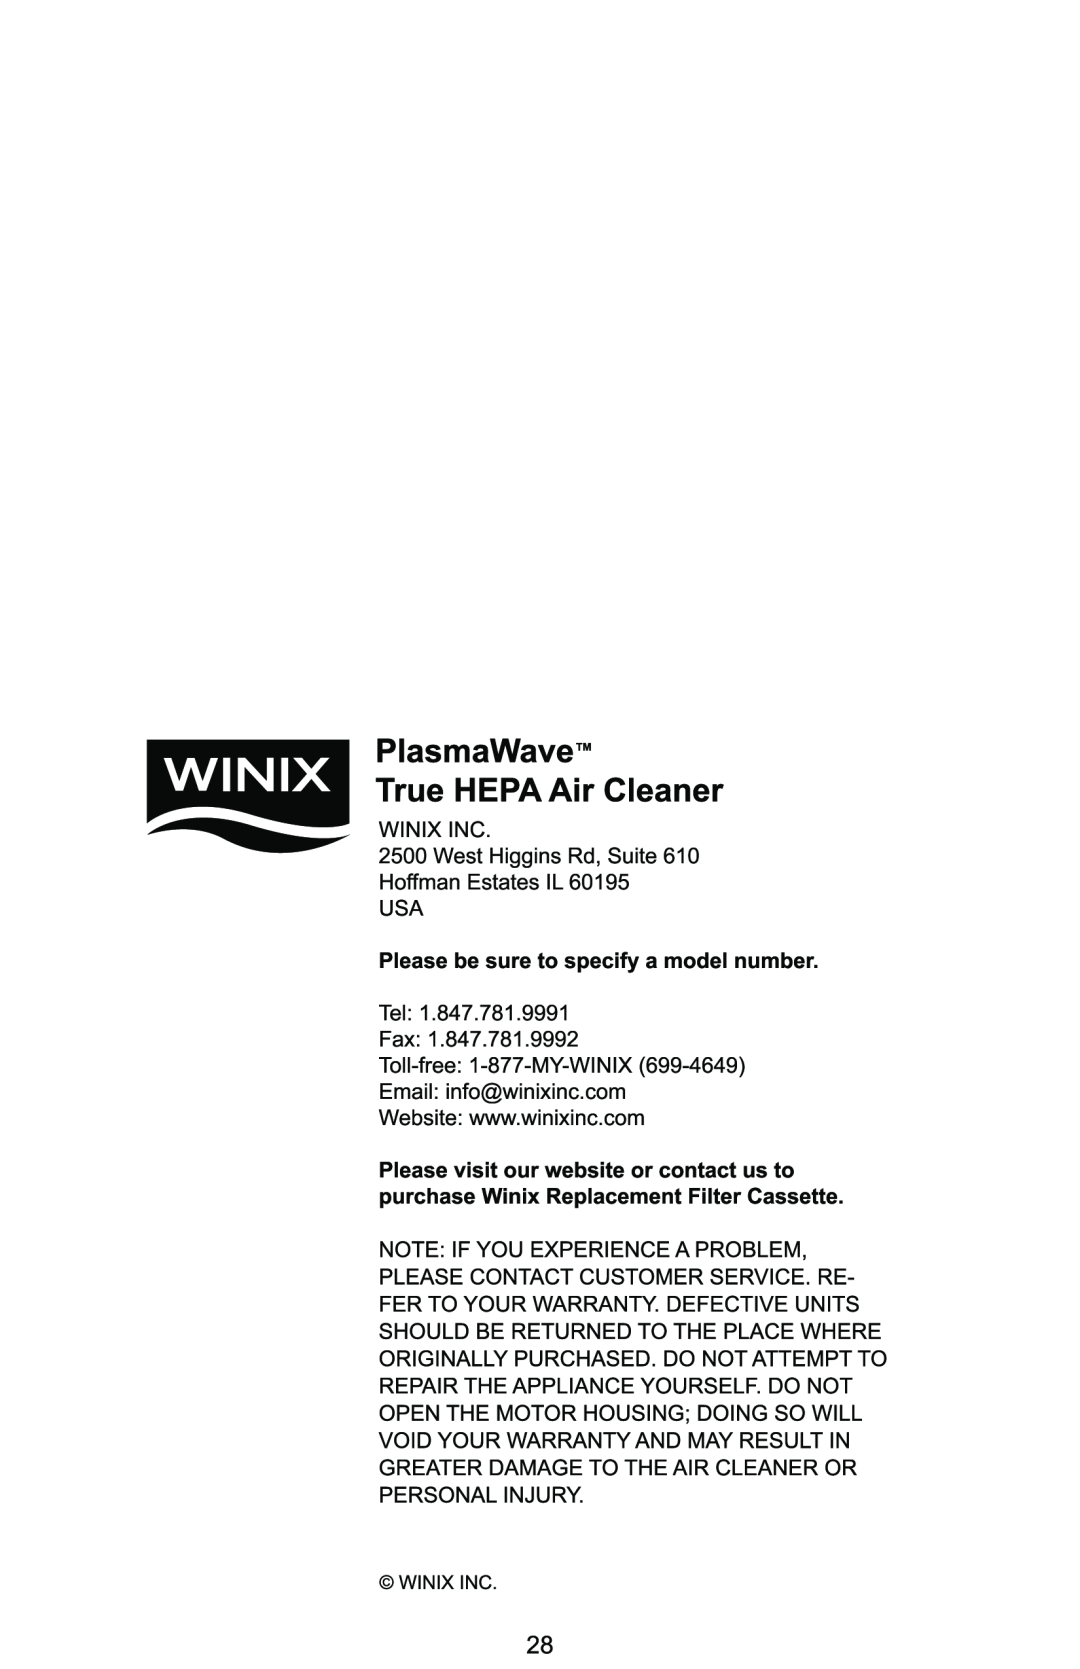 Winix Air Cleaner manual 